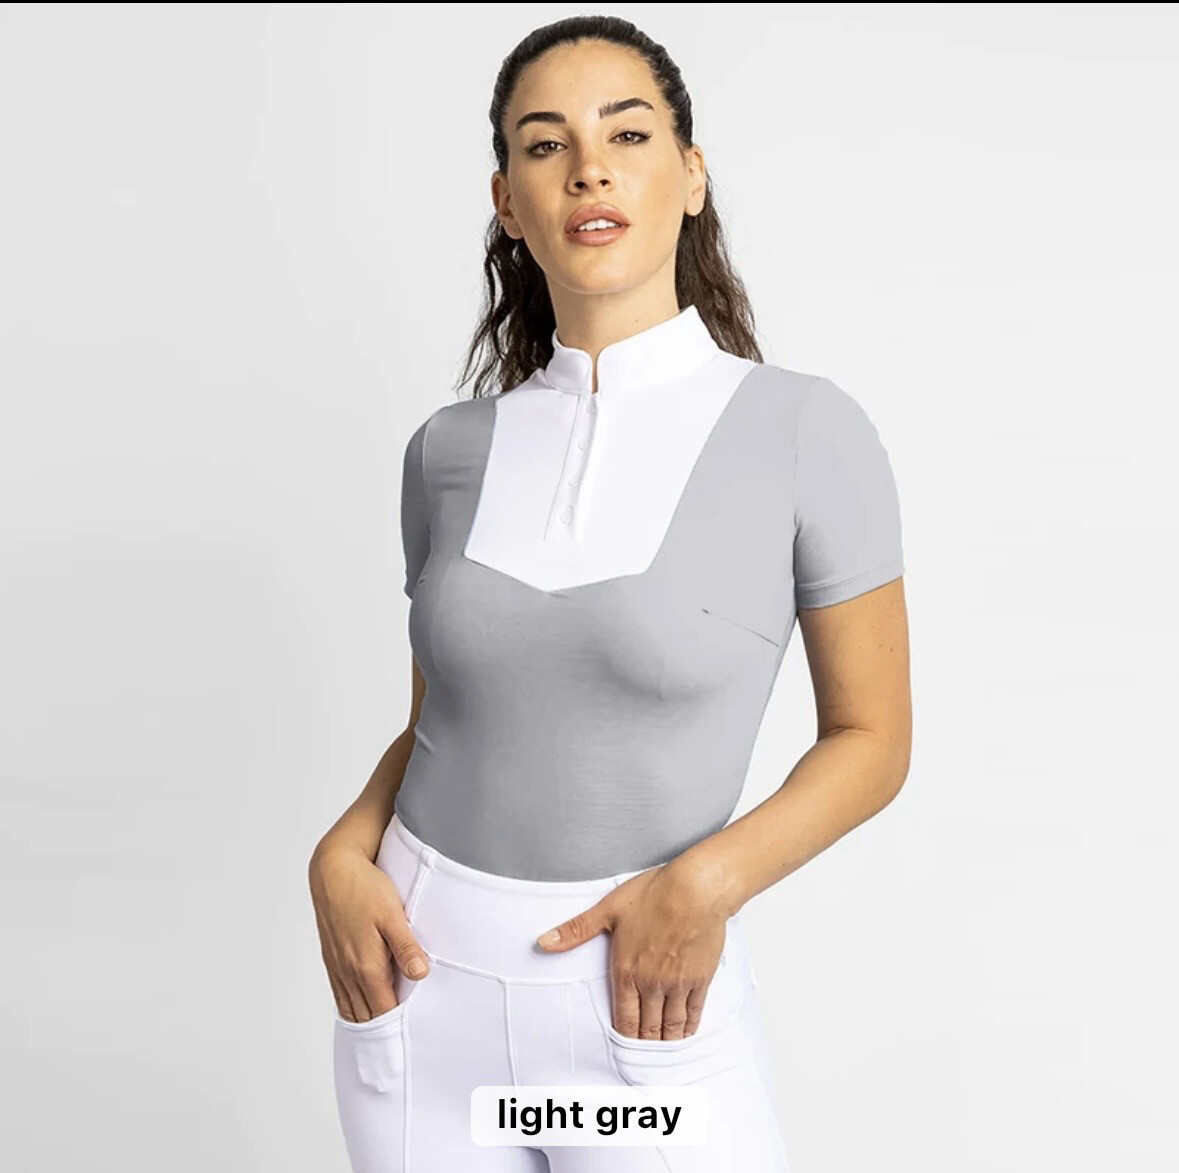 Equi-Site Competition Shirt LIGHT GREY, Competition Shirt Light Grey: XS